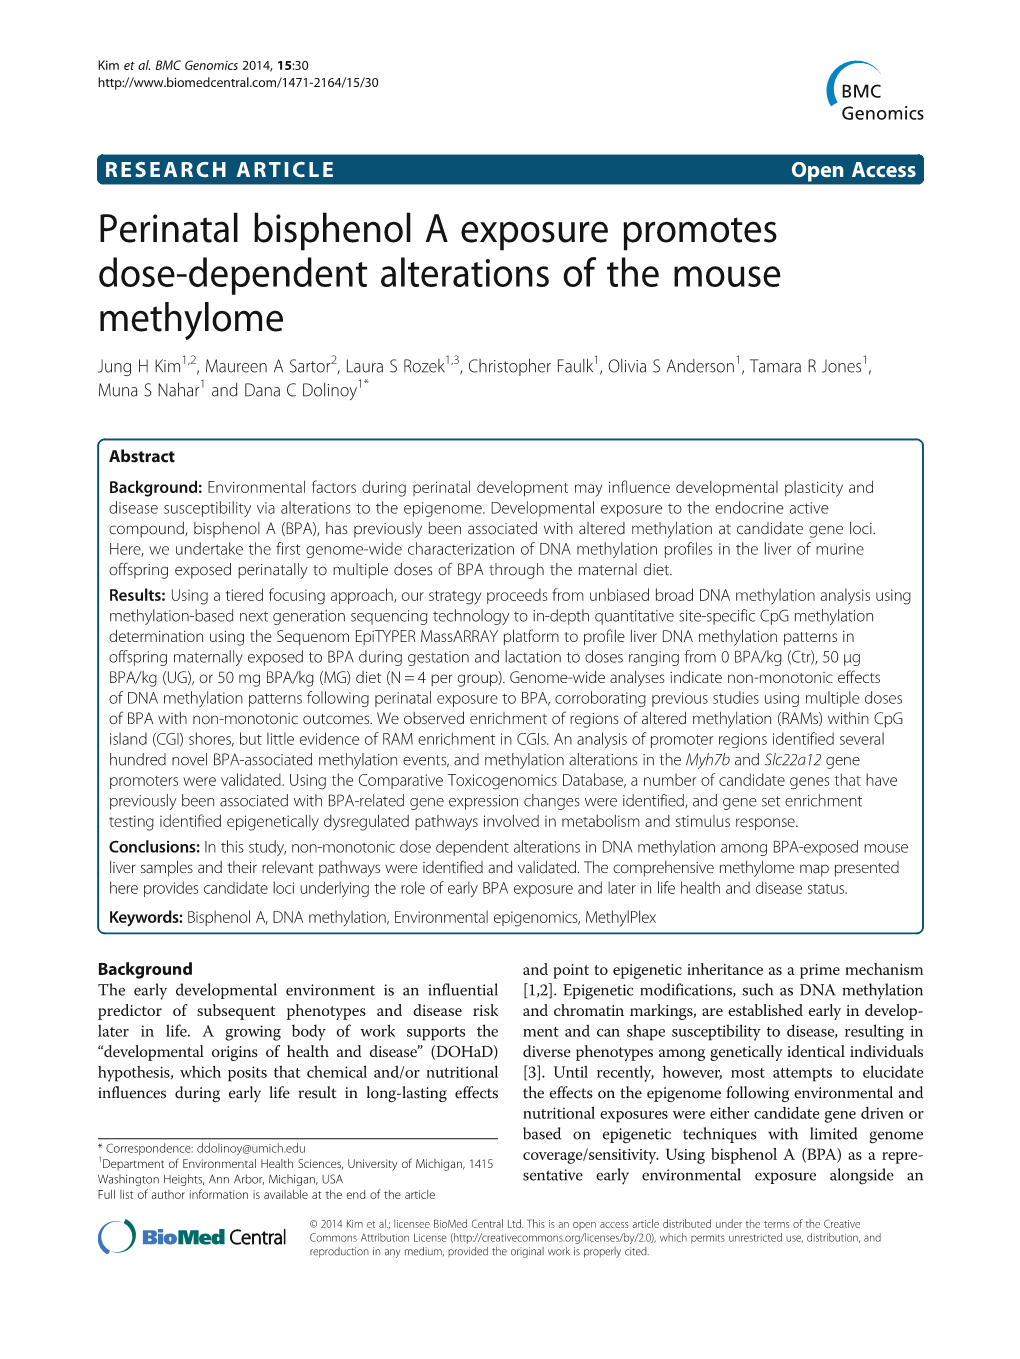 Perinatal Bisphenol a Exposure Promotes Dose-Dependent